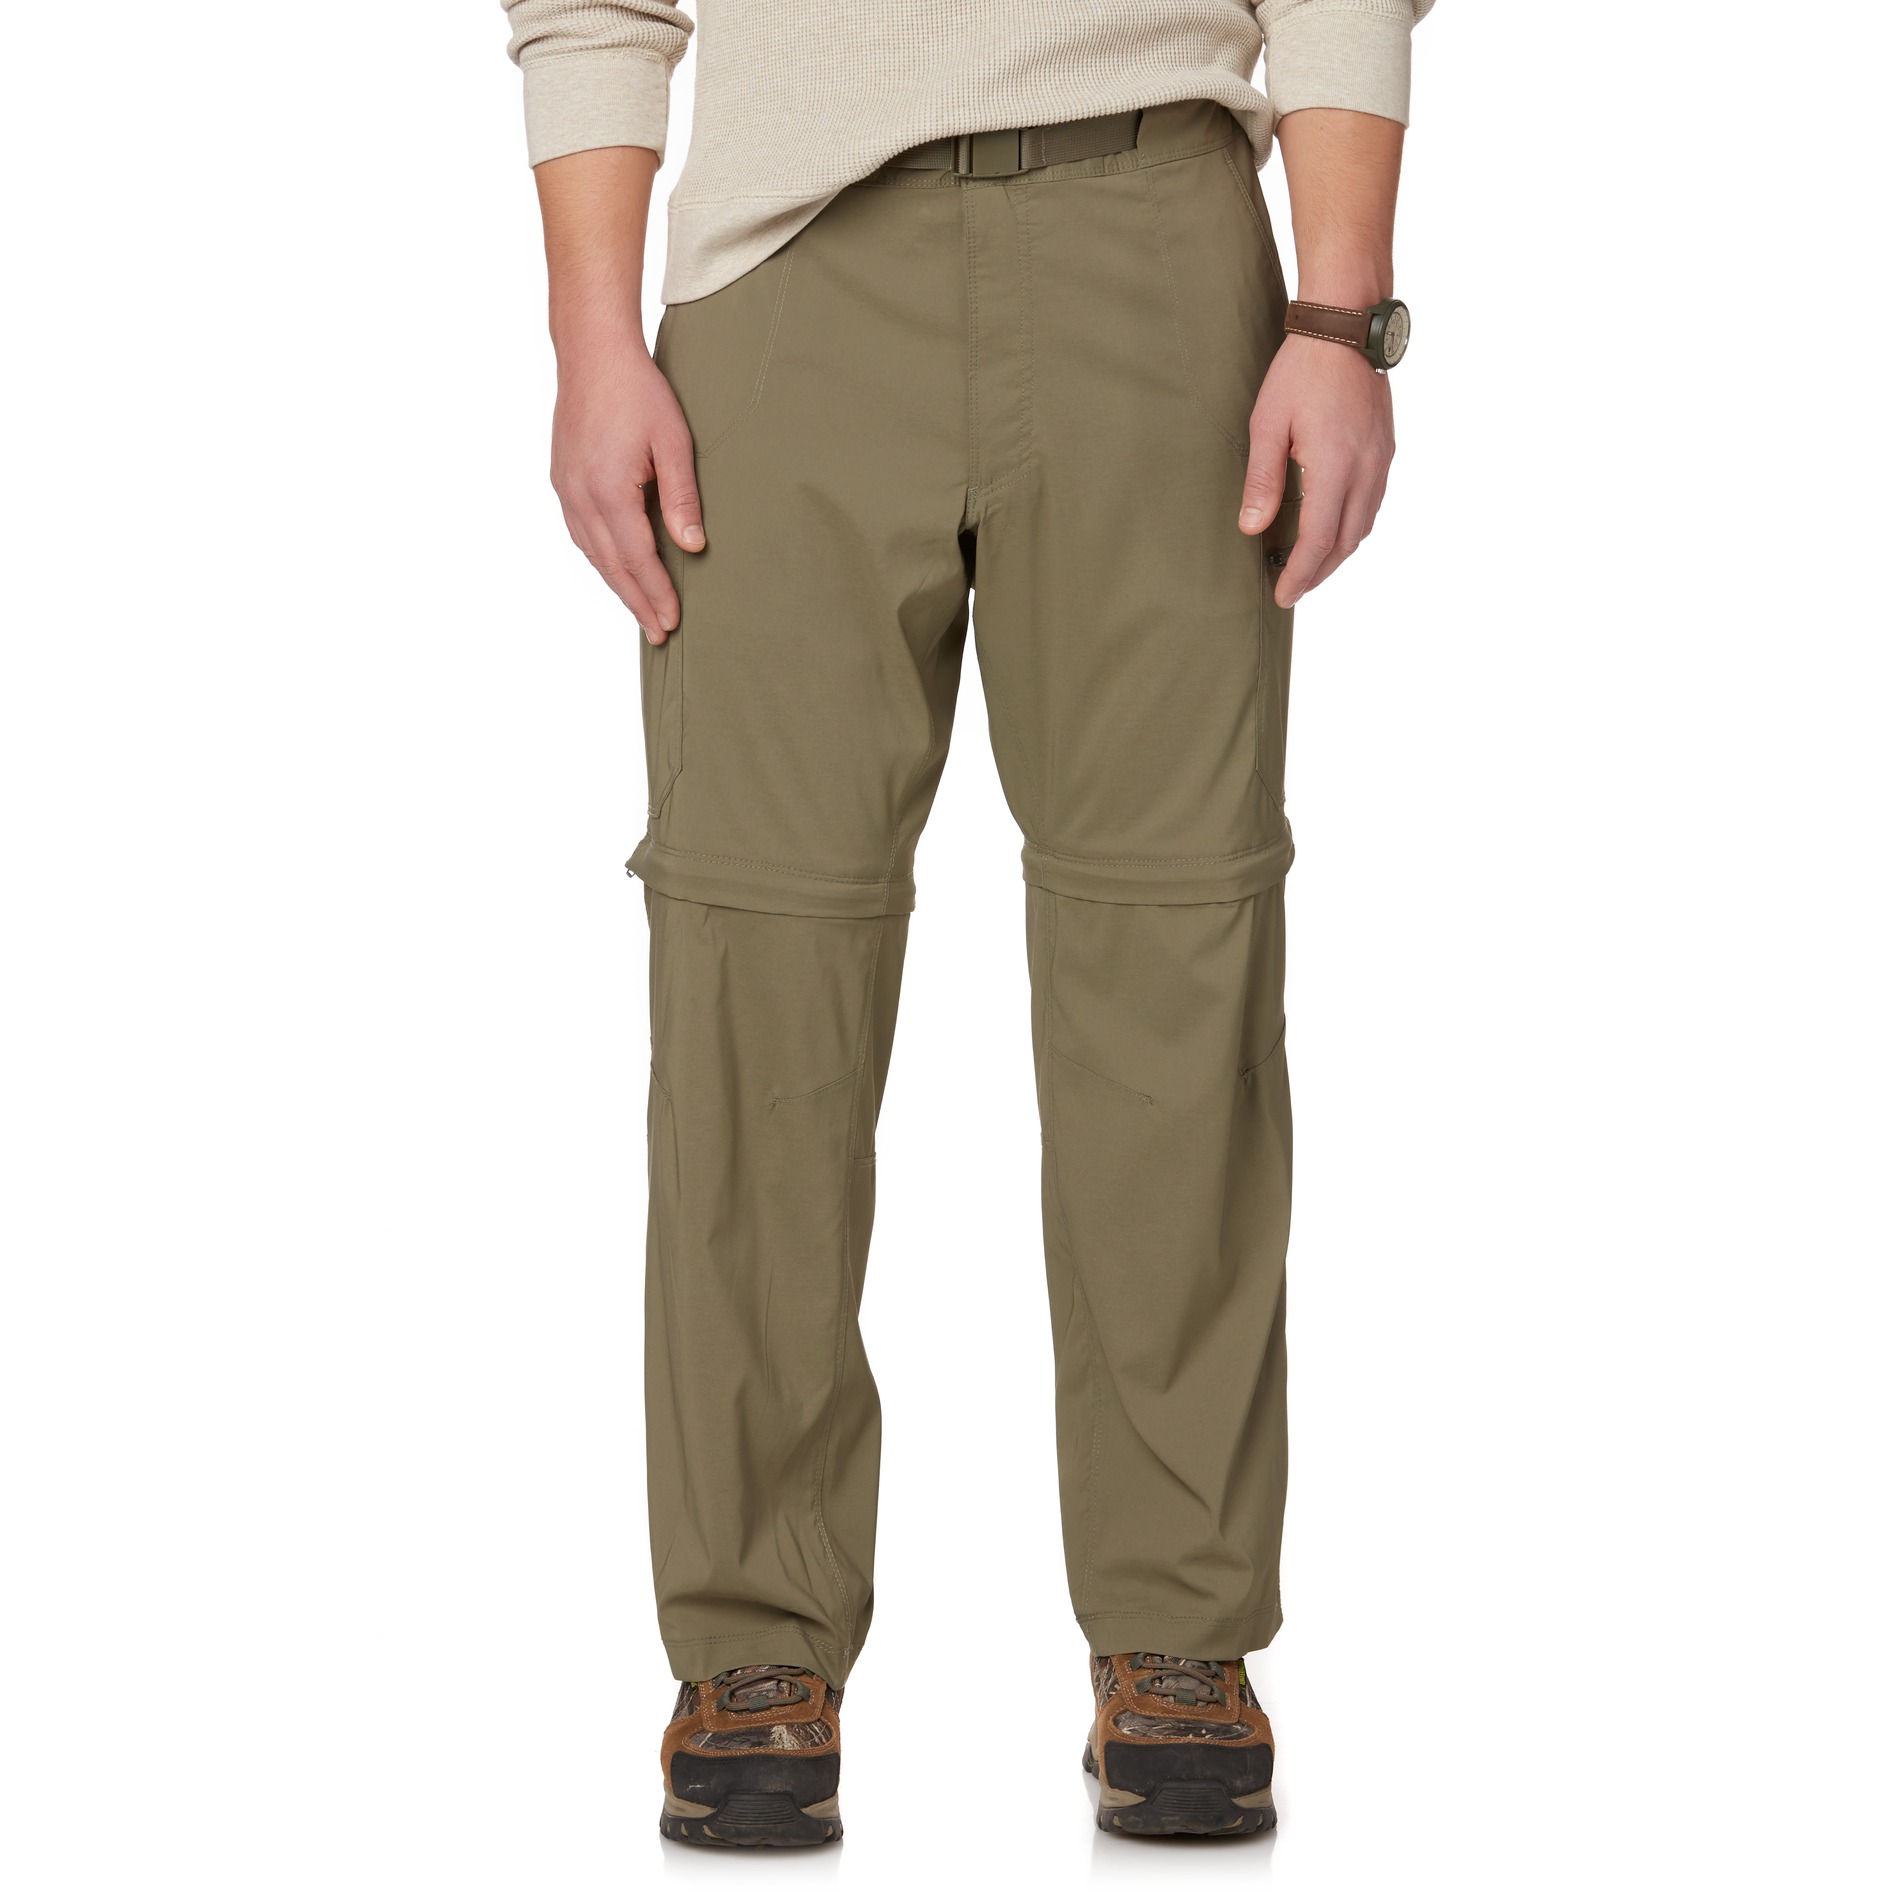 Outdoor Life Men's Convertible Pants - Sears